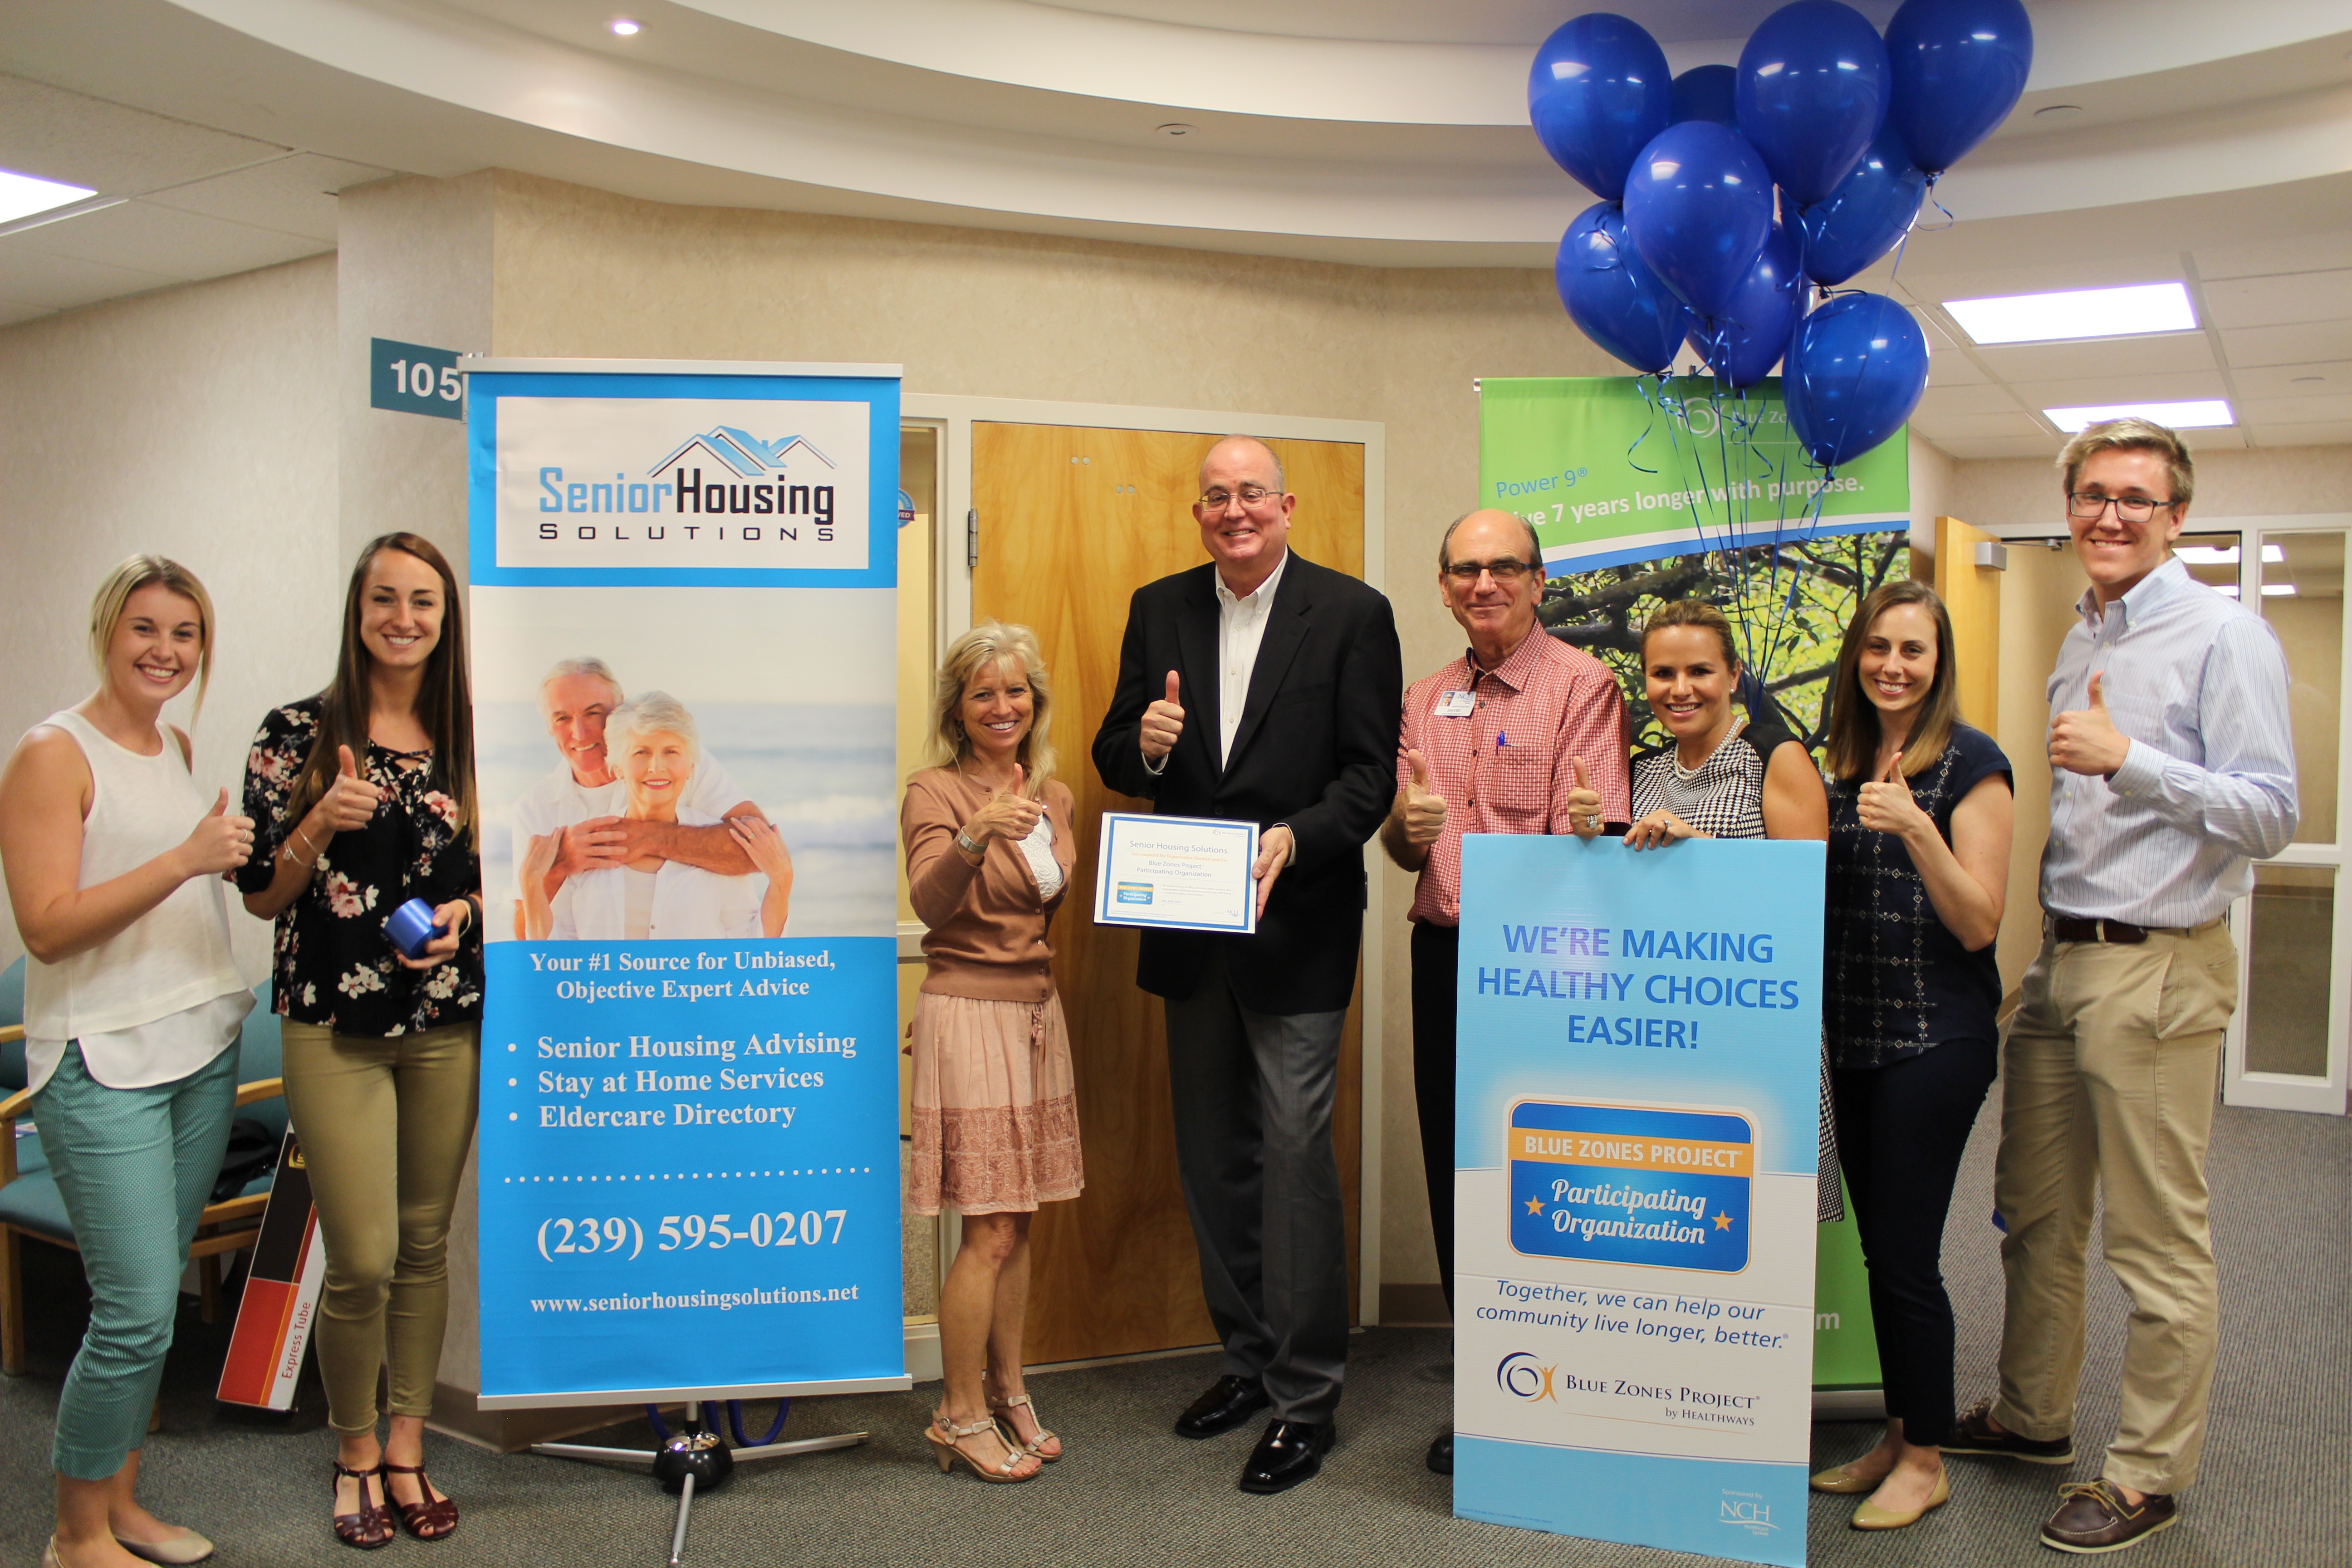 Blue Zones Project recognizes Senior Housing Solutions